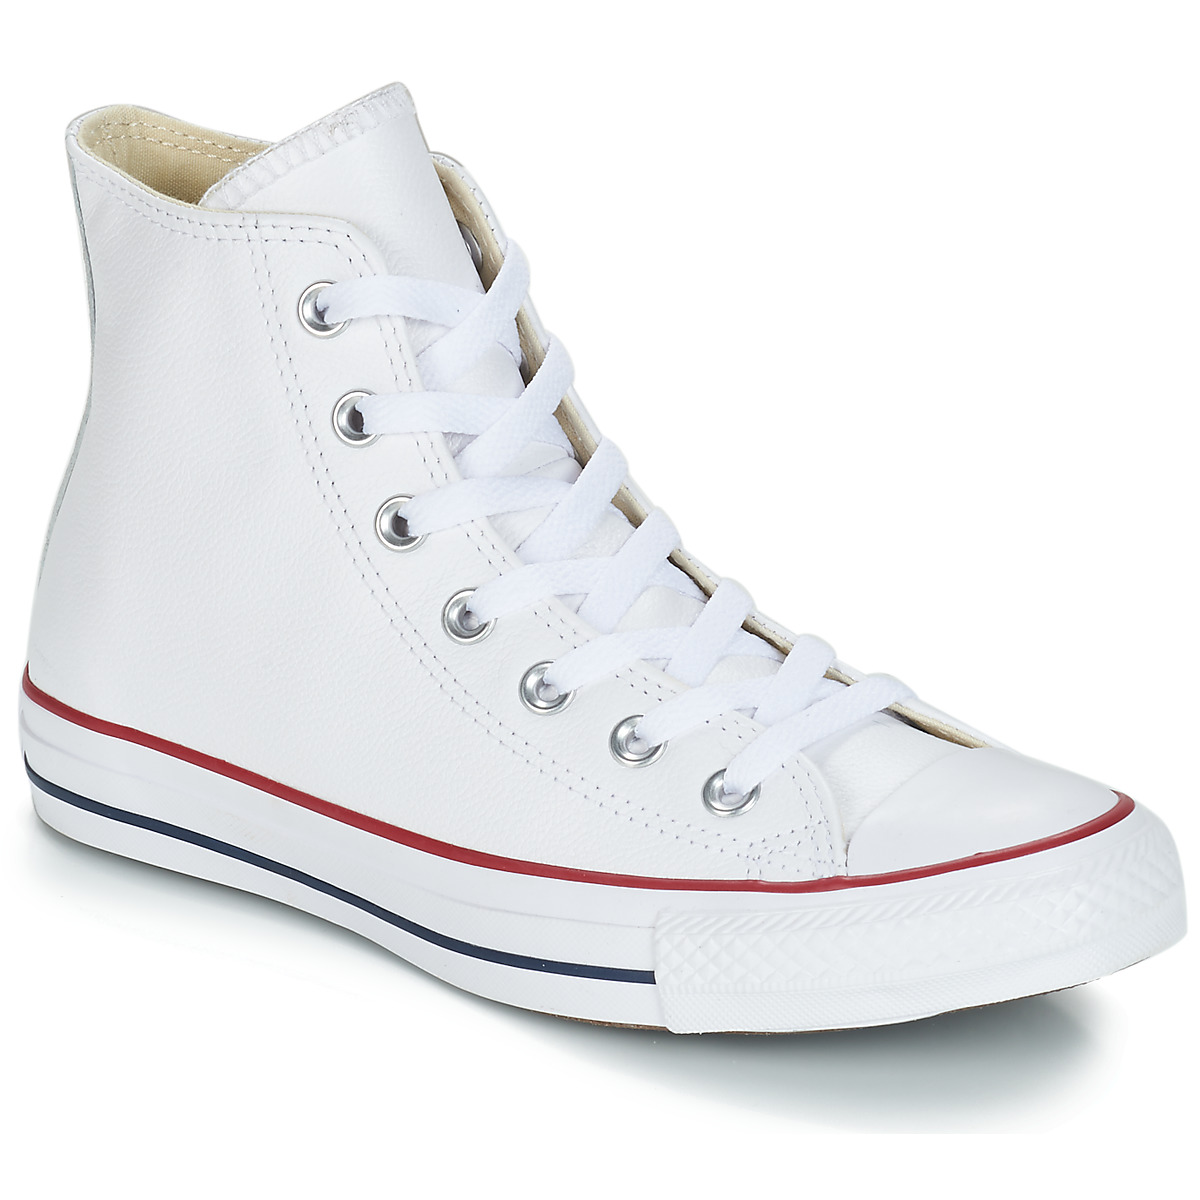 Converse Chuck Taylor All Star Hi Hoge sneakers - Leren Sneaker - Dames - Wit - Maat 36,5